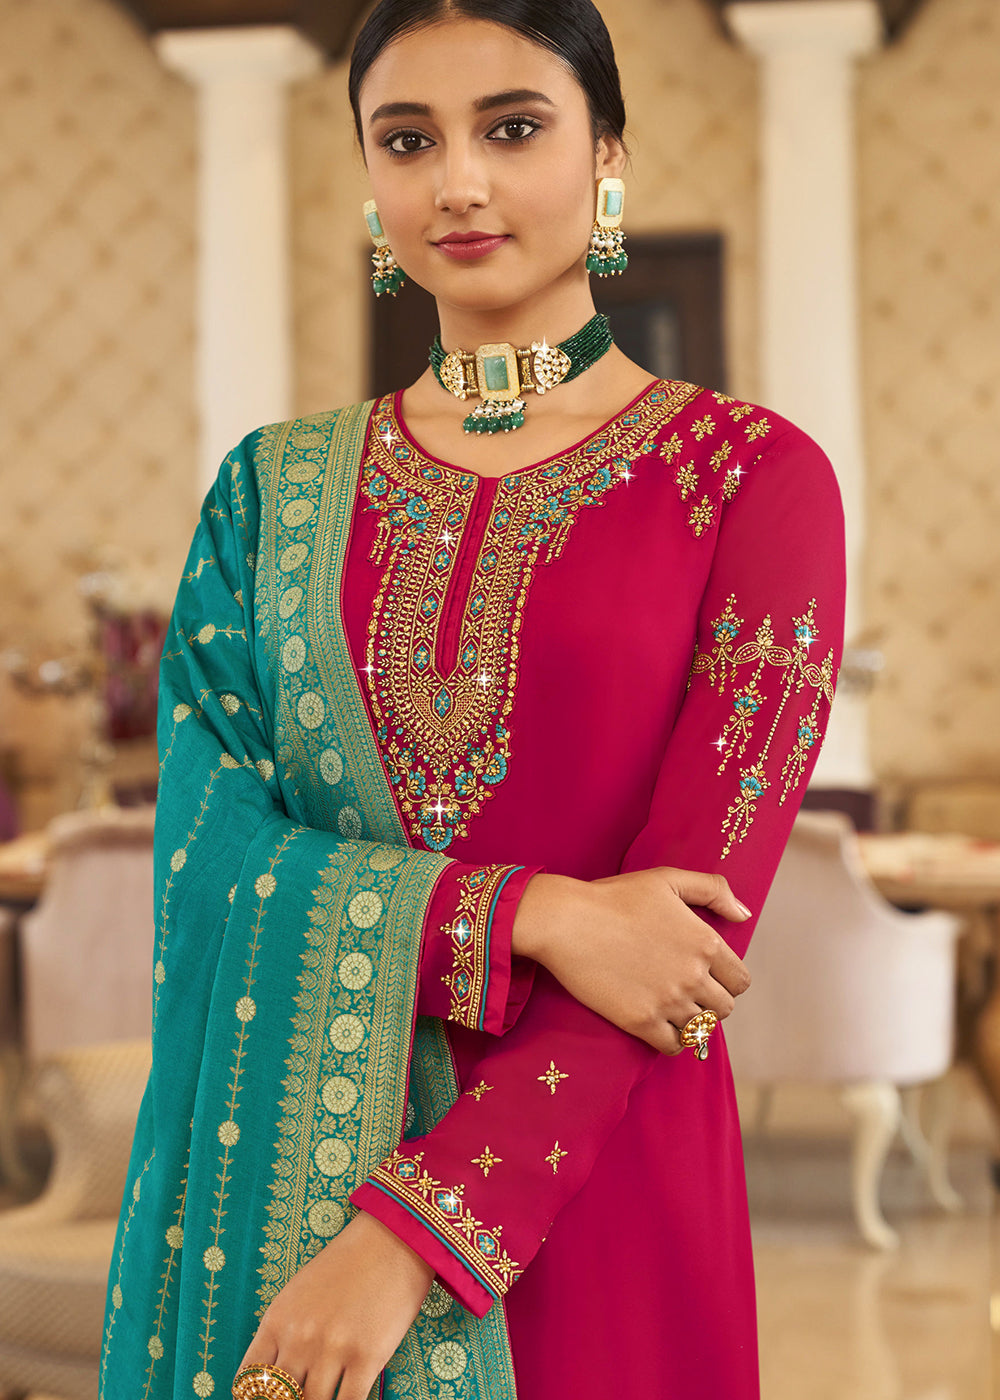 Buy Now Wedding Party Appealing Dark Pink Thread & Zari Salwar Suit Online in USA, UK, Canada & Worldwide at Empress Clothing. 